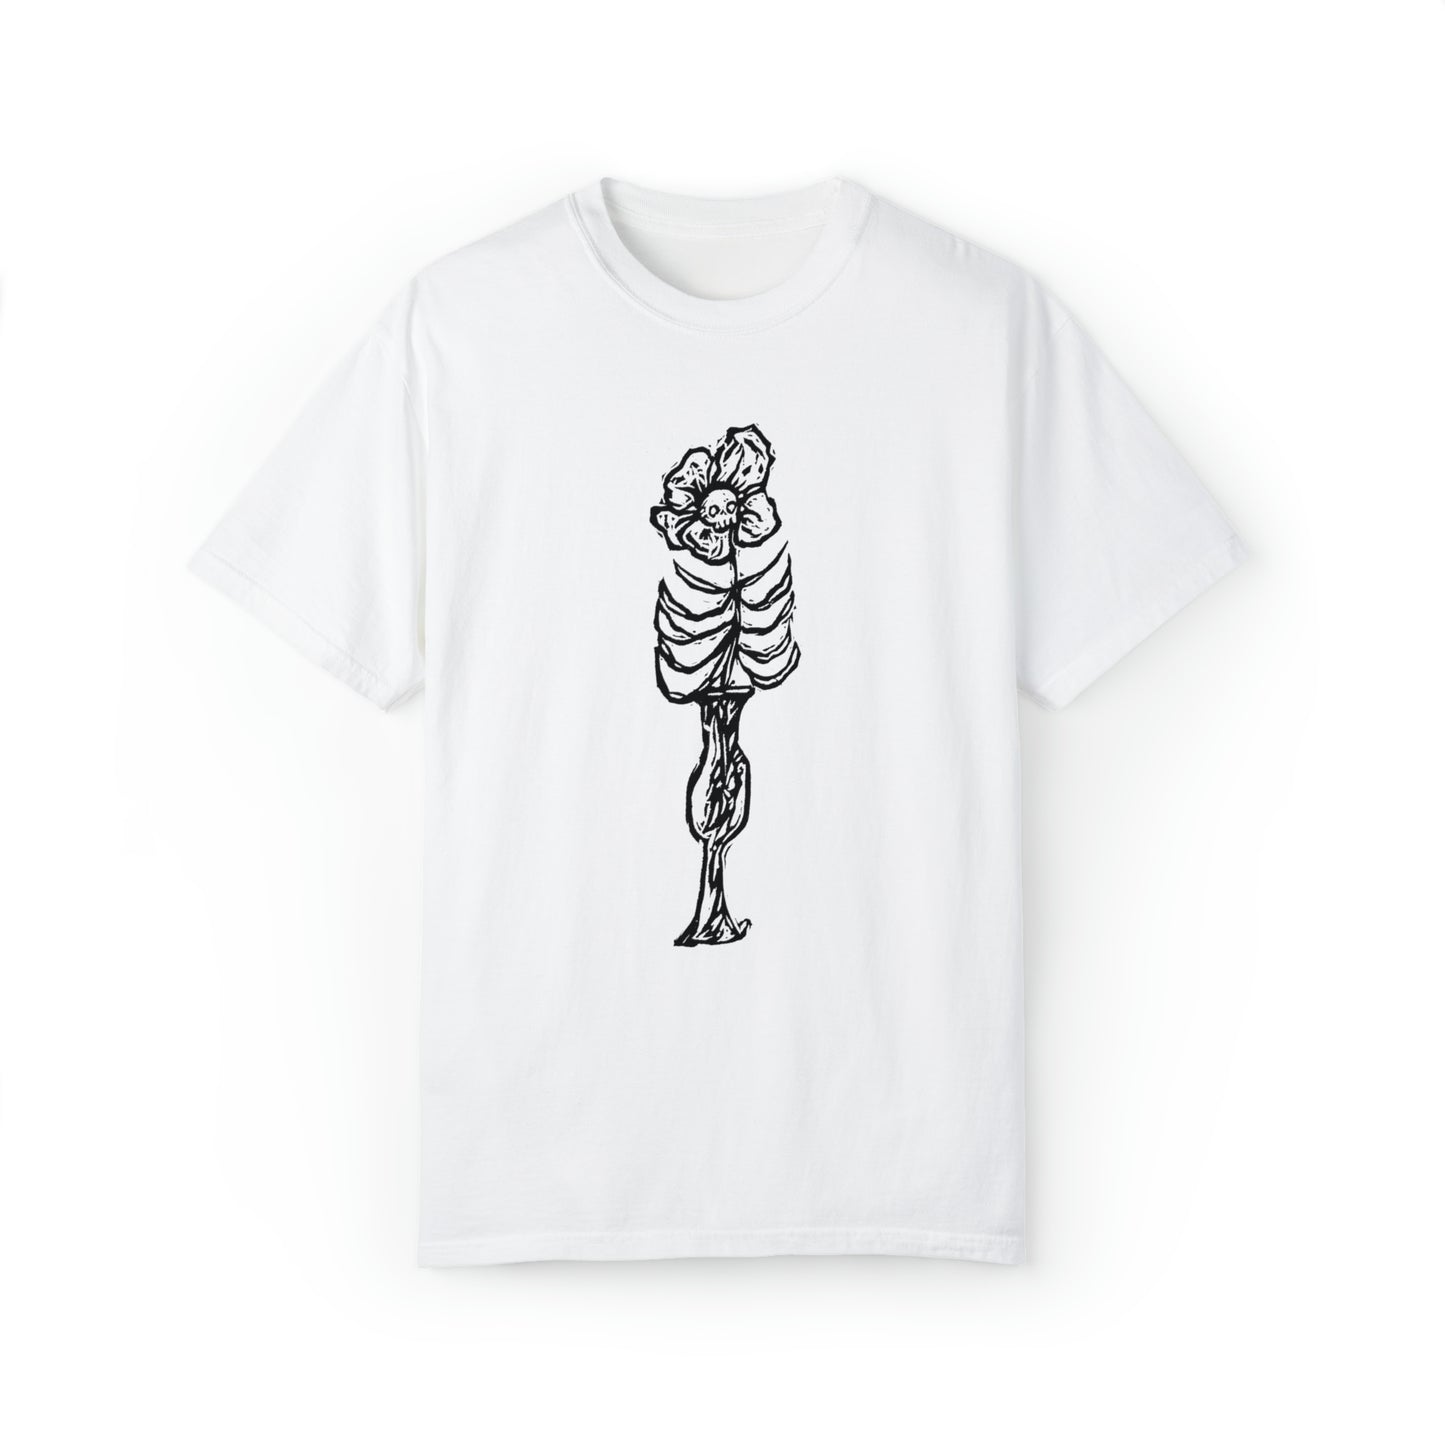 Creepy Flower Skull Halloween T-Shirt - Comfort Colors T-Shirt for Spooky Season and Goblincore Aesthetic